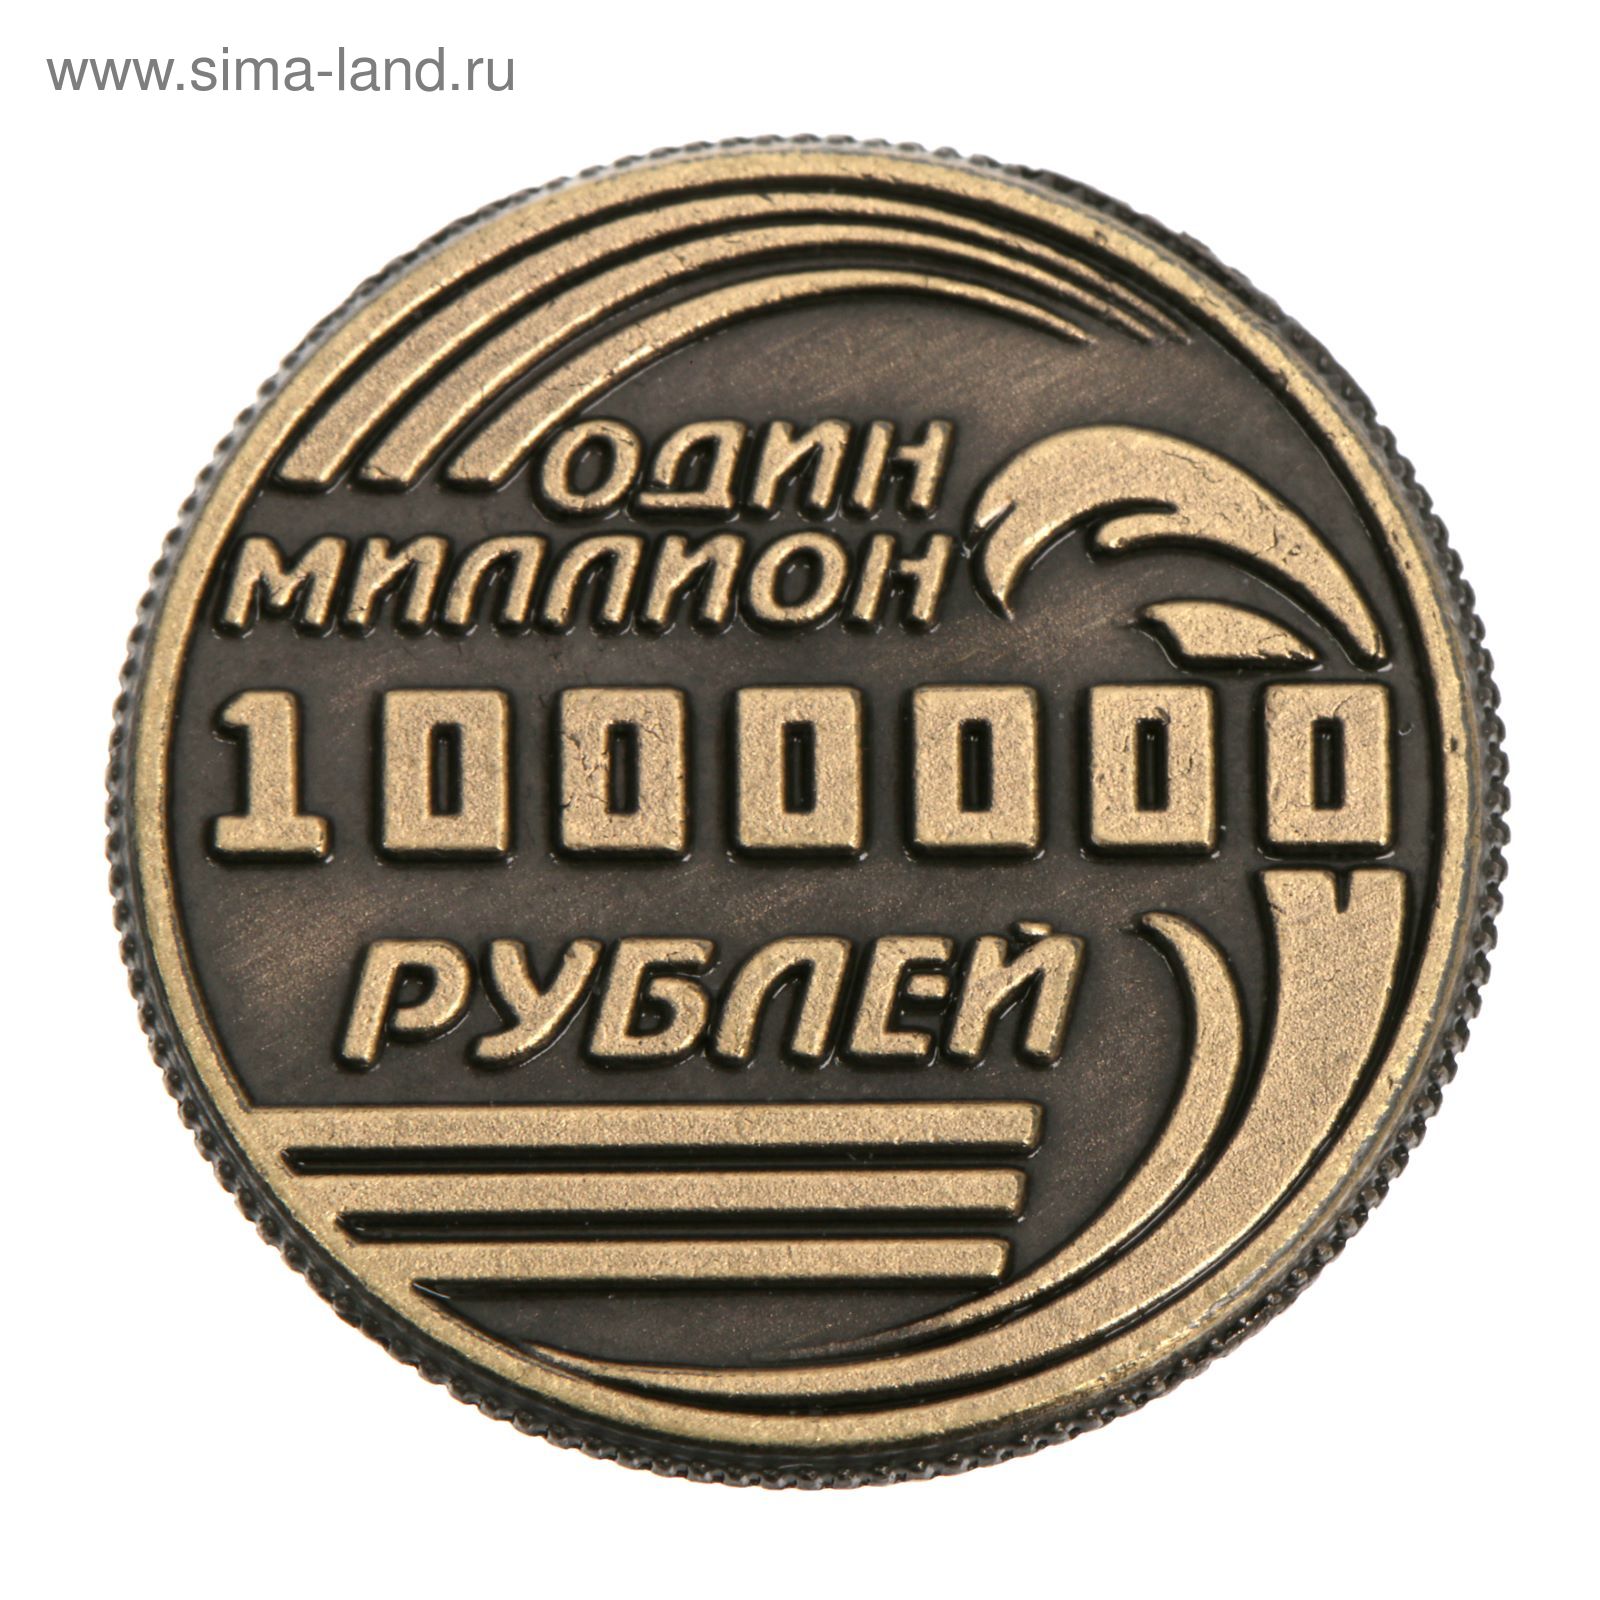 1000000 рублей семьям. Монета 1000000 рублей. 1000000 Рублей 1 монета. Монета сувенирная. Монета сувенирная 1 миллион.